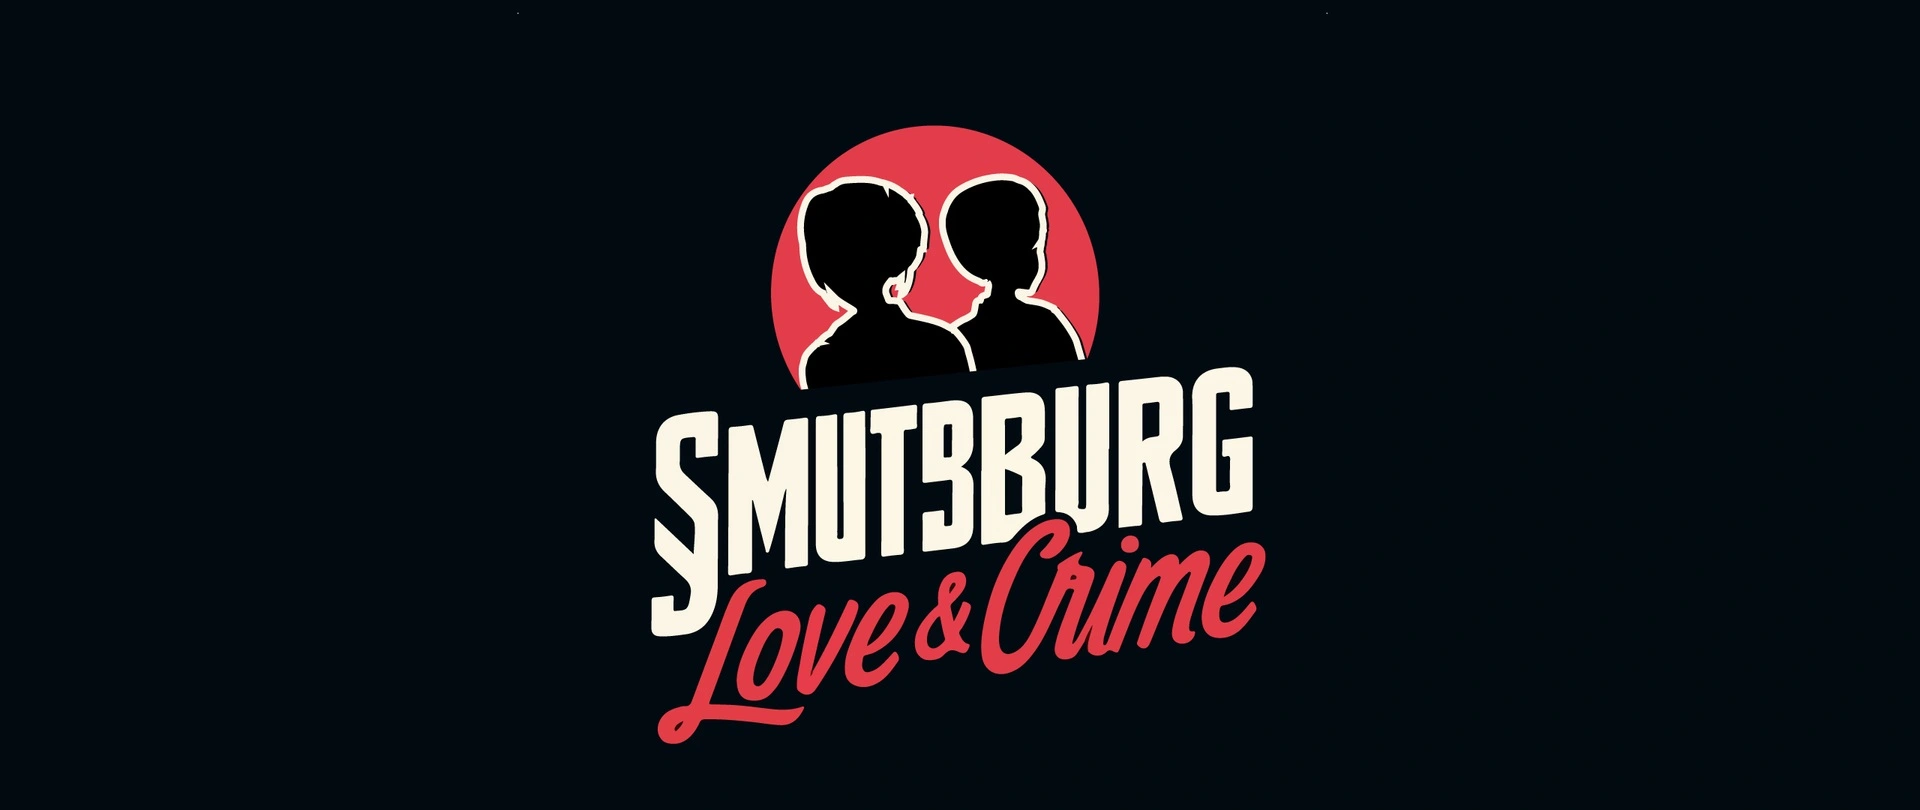 Smutburg: Love And Crime main image